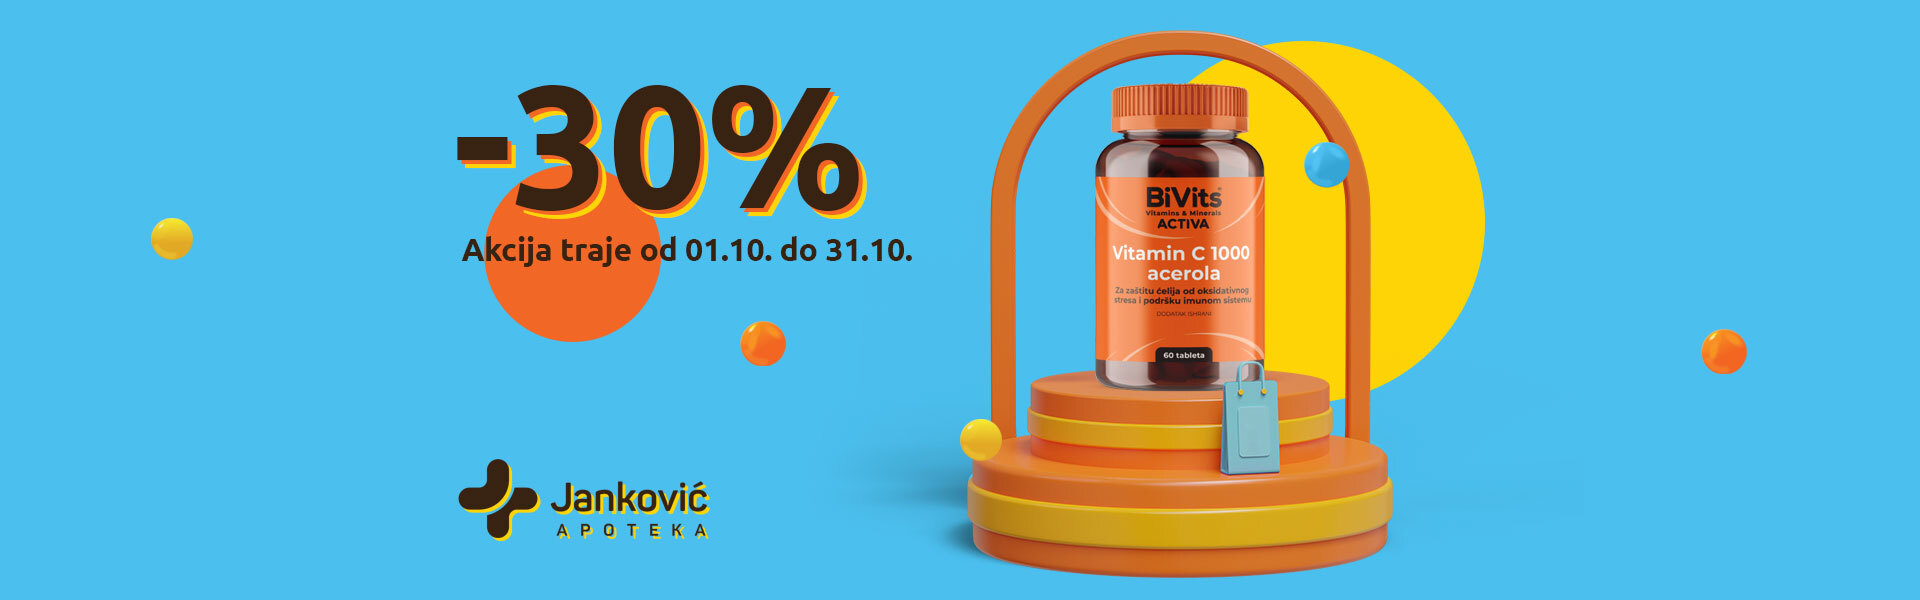 Bivits Vitamin C 1000mg Acerola 30% POPUST